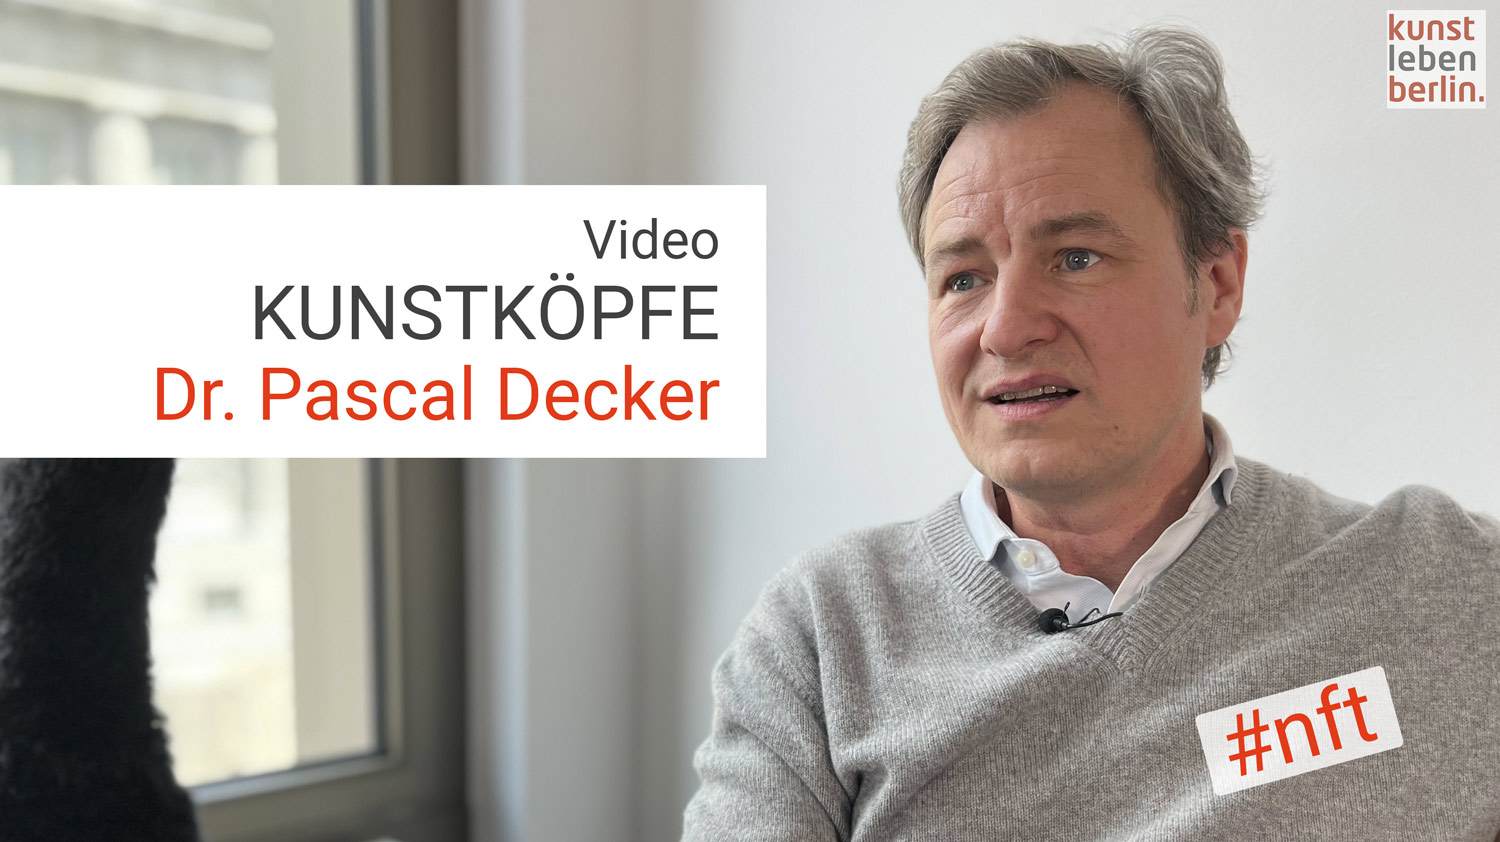 Dr. Pascal Decker im Kunstköpfe Interview mit Kunstleben Berlin